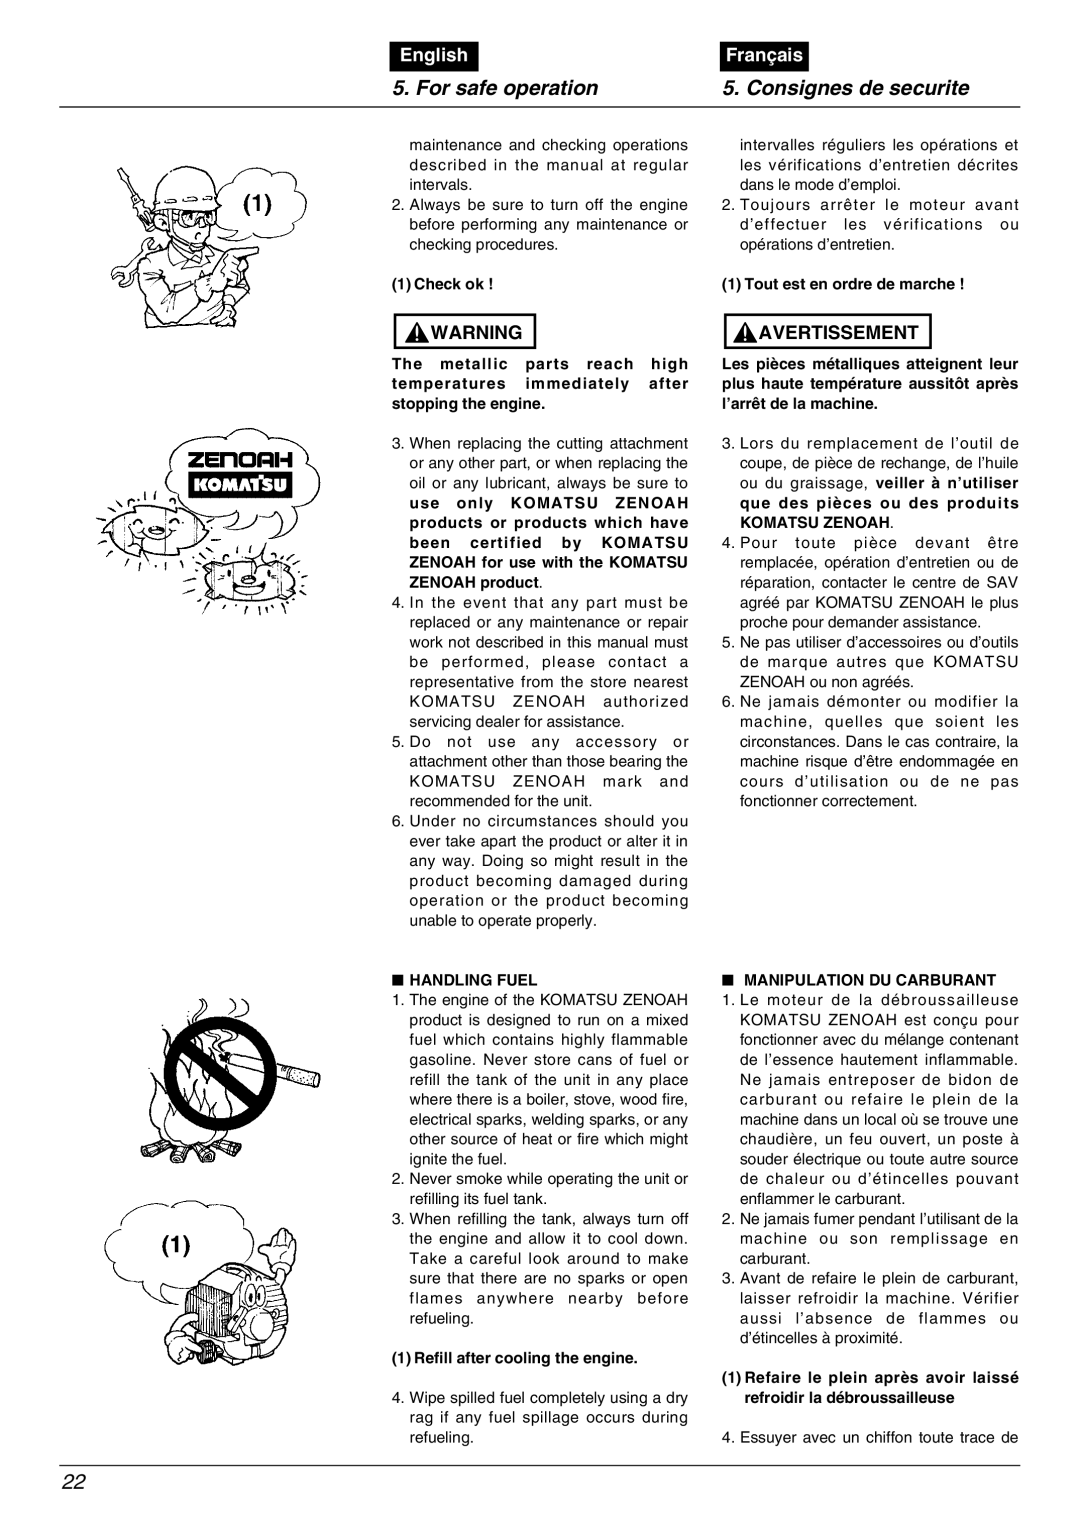 Zenoah BK4500FL, BK3500FL, BK5300DL manual For safe operation, Consignes de securite, English, Français, Avertissement 